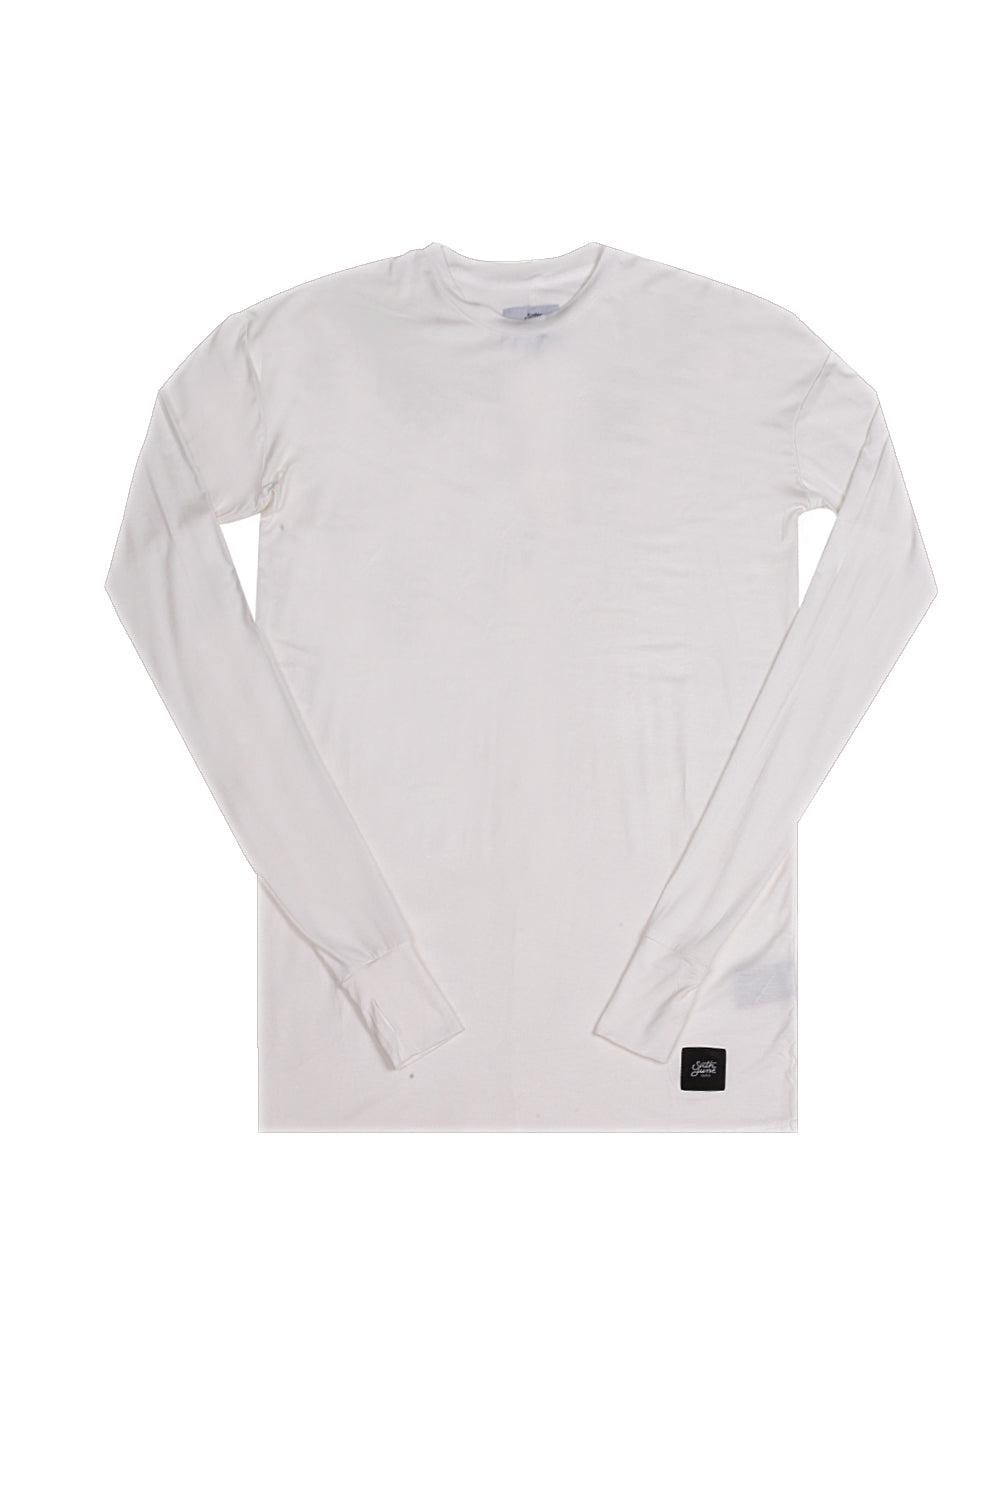 Sixth June - T-shirt long manches longues blanc 1878C